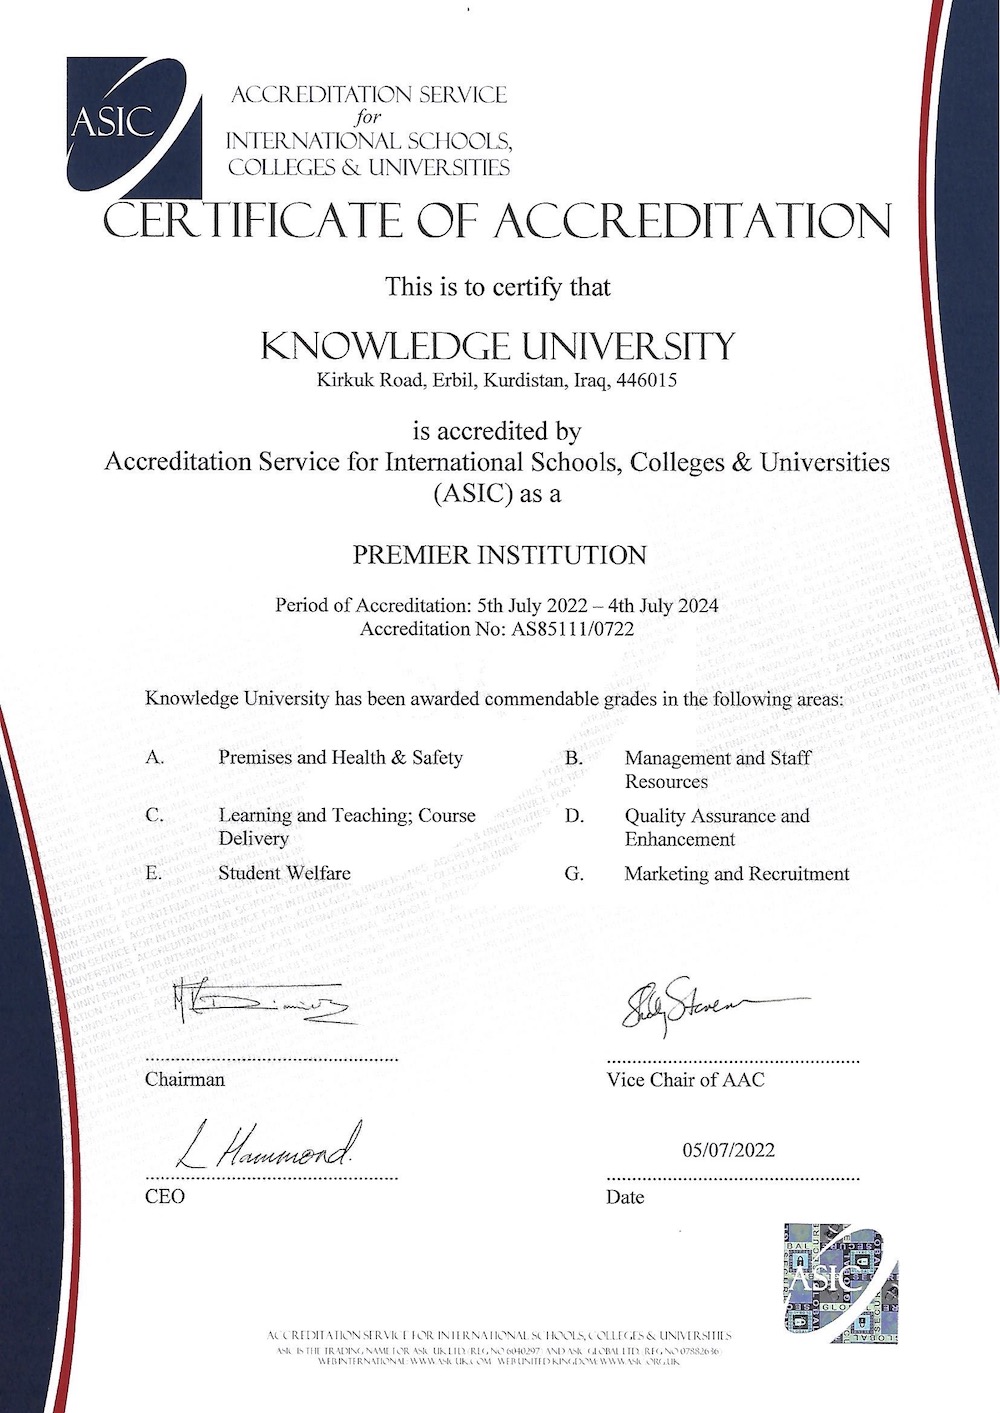 Knowledge University earned an international accreditation